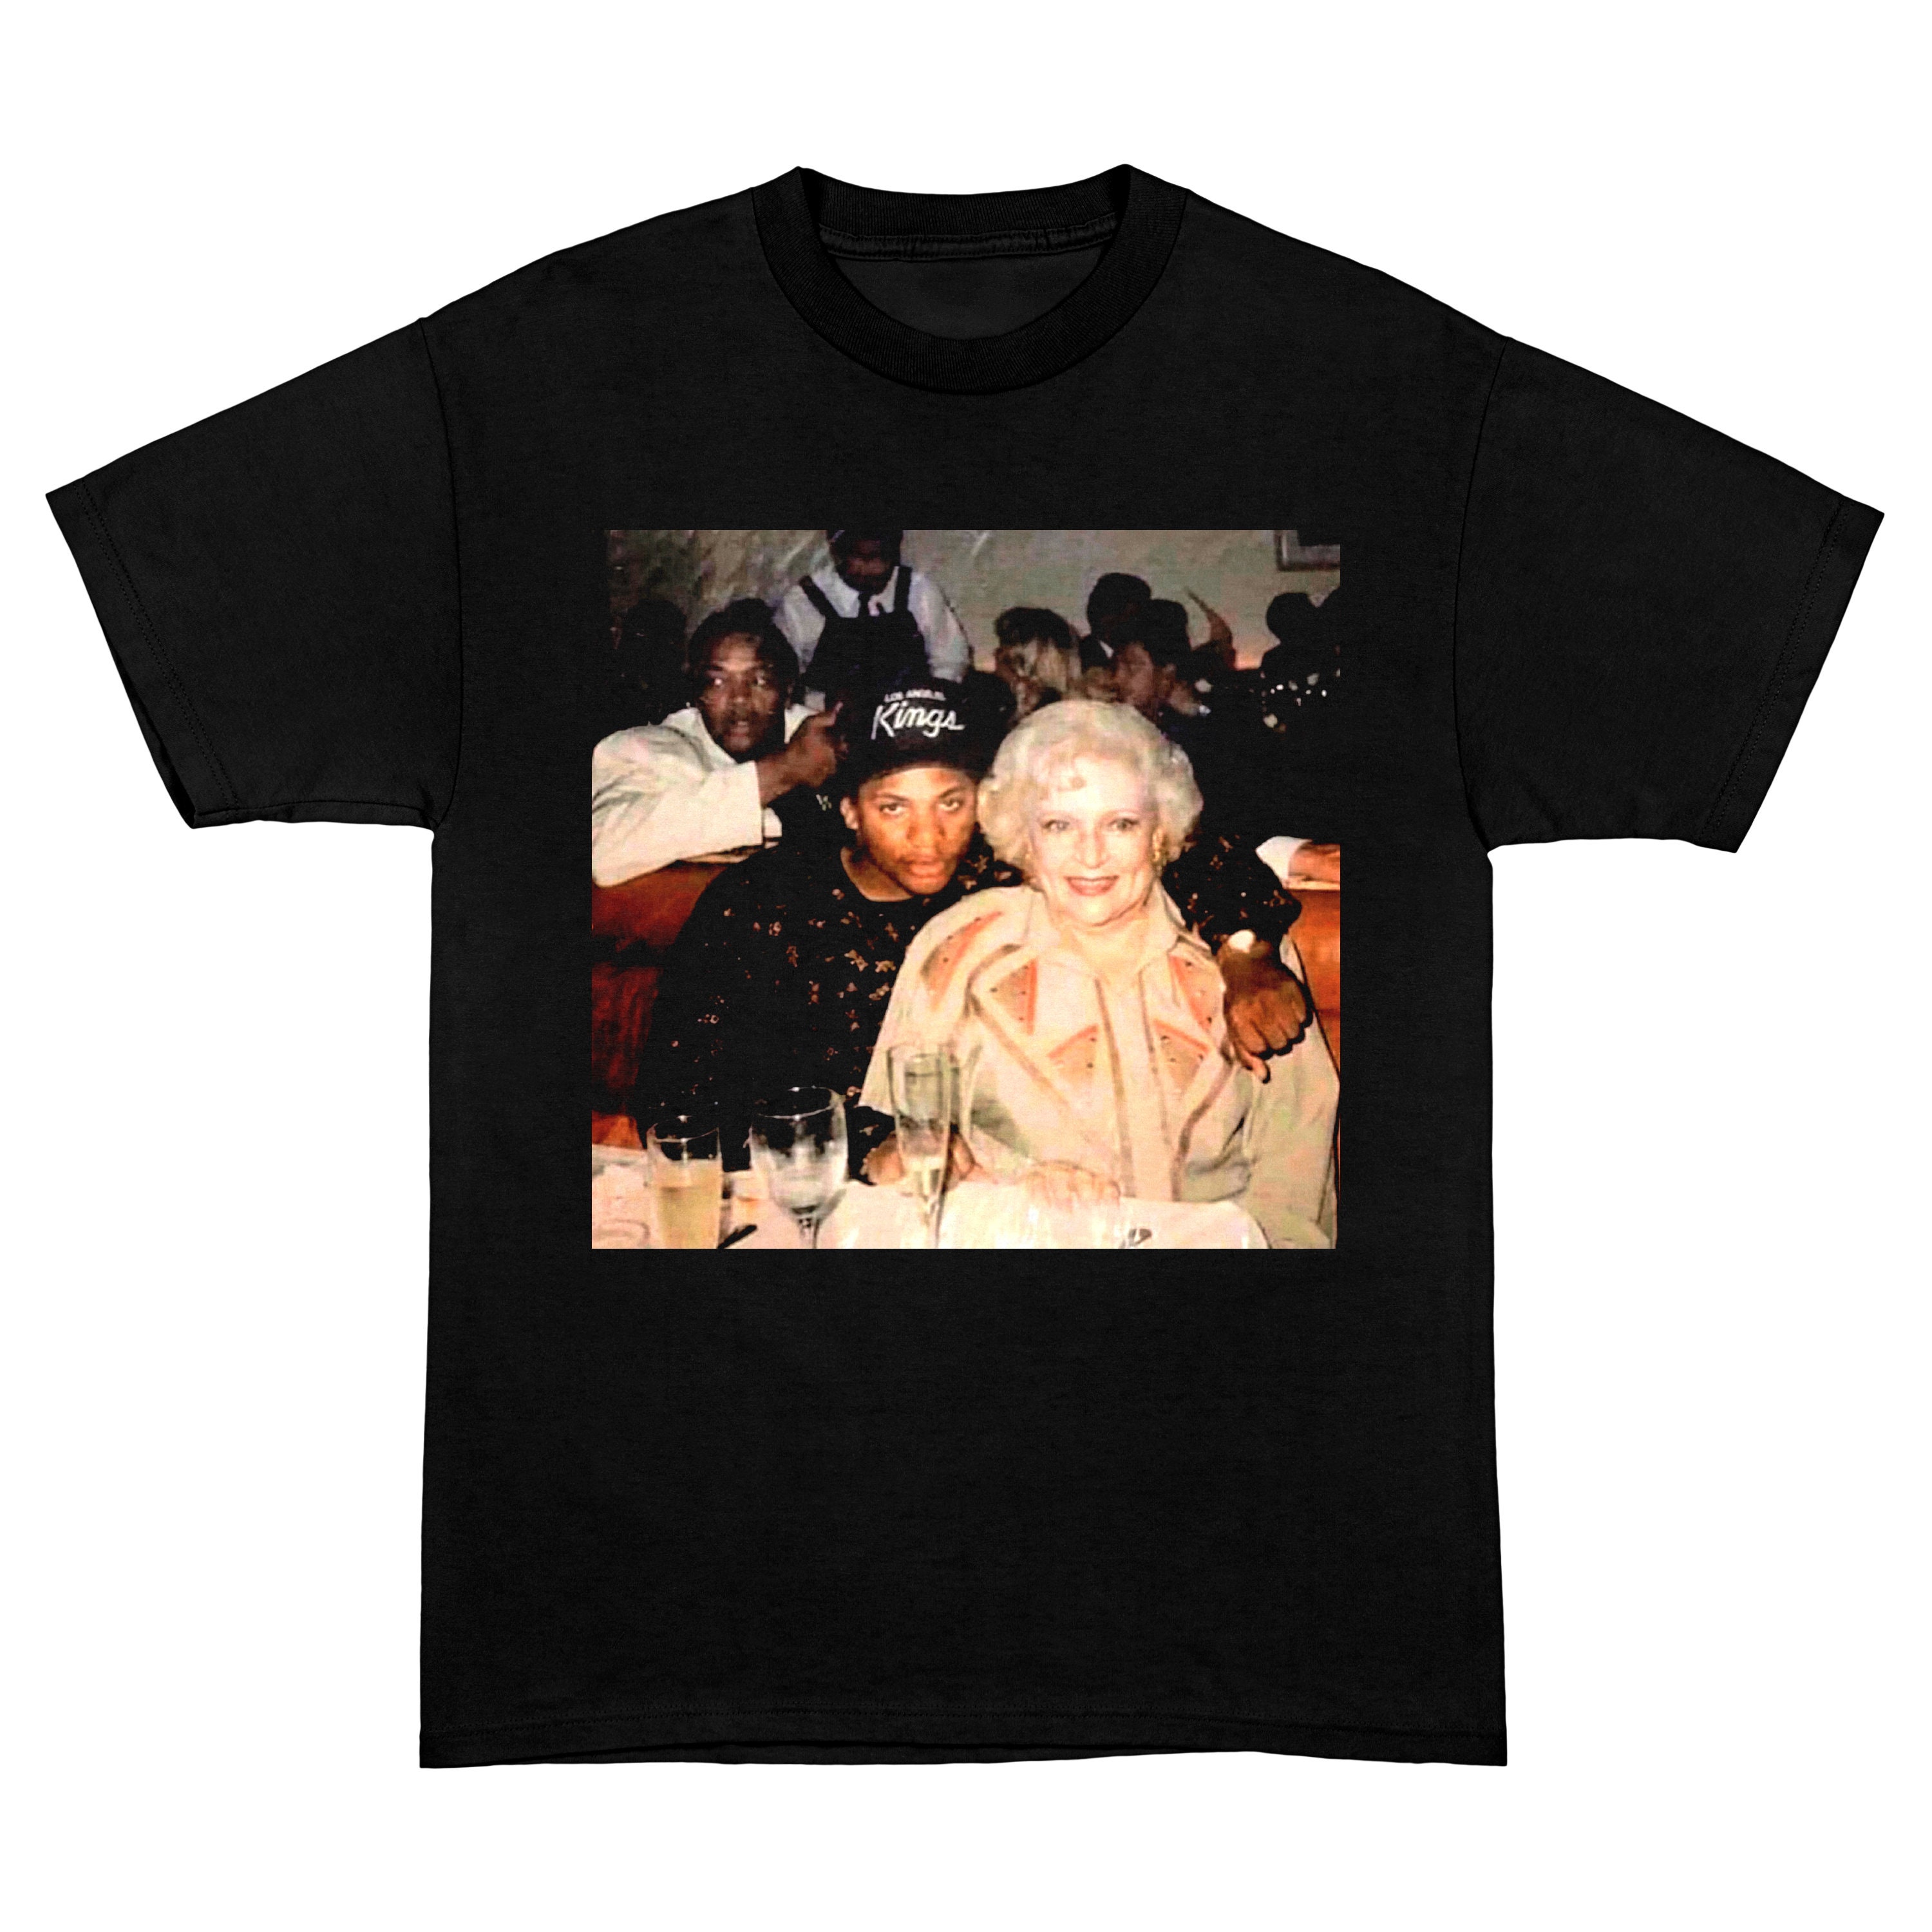 Betty White Eazy E Shirt, Compton Rapper Tee, Betty White Stay Golden T-shirt